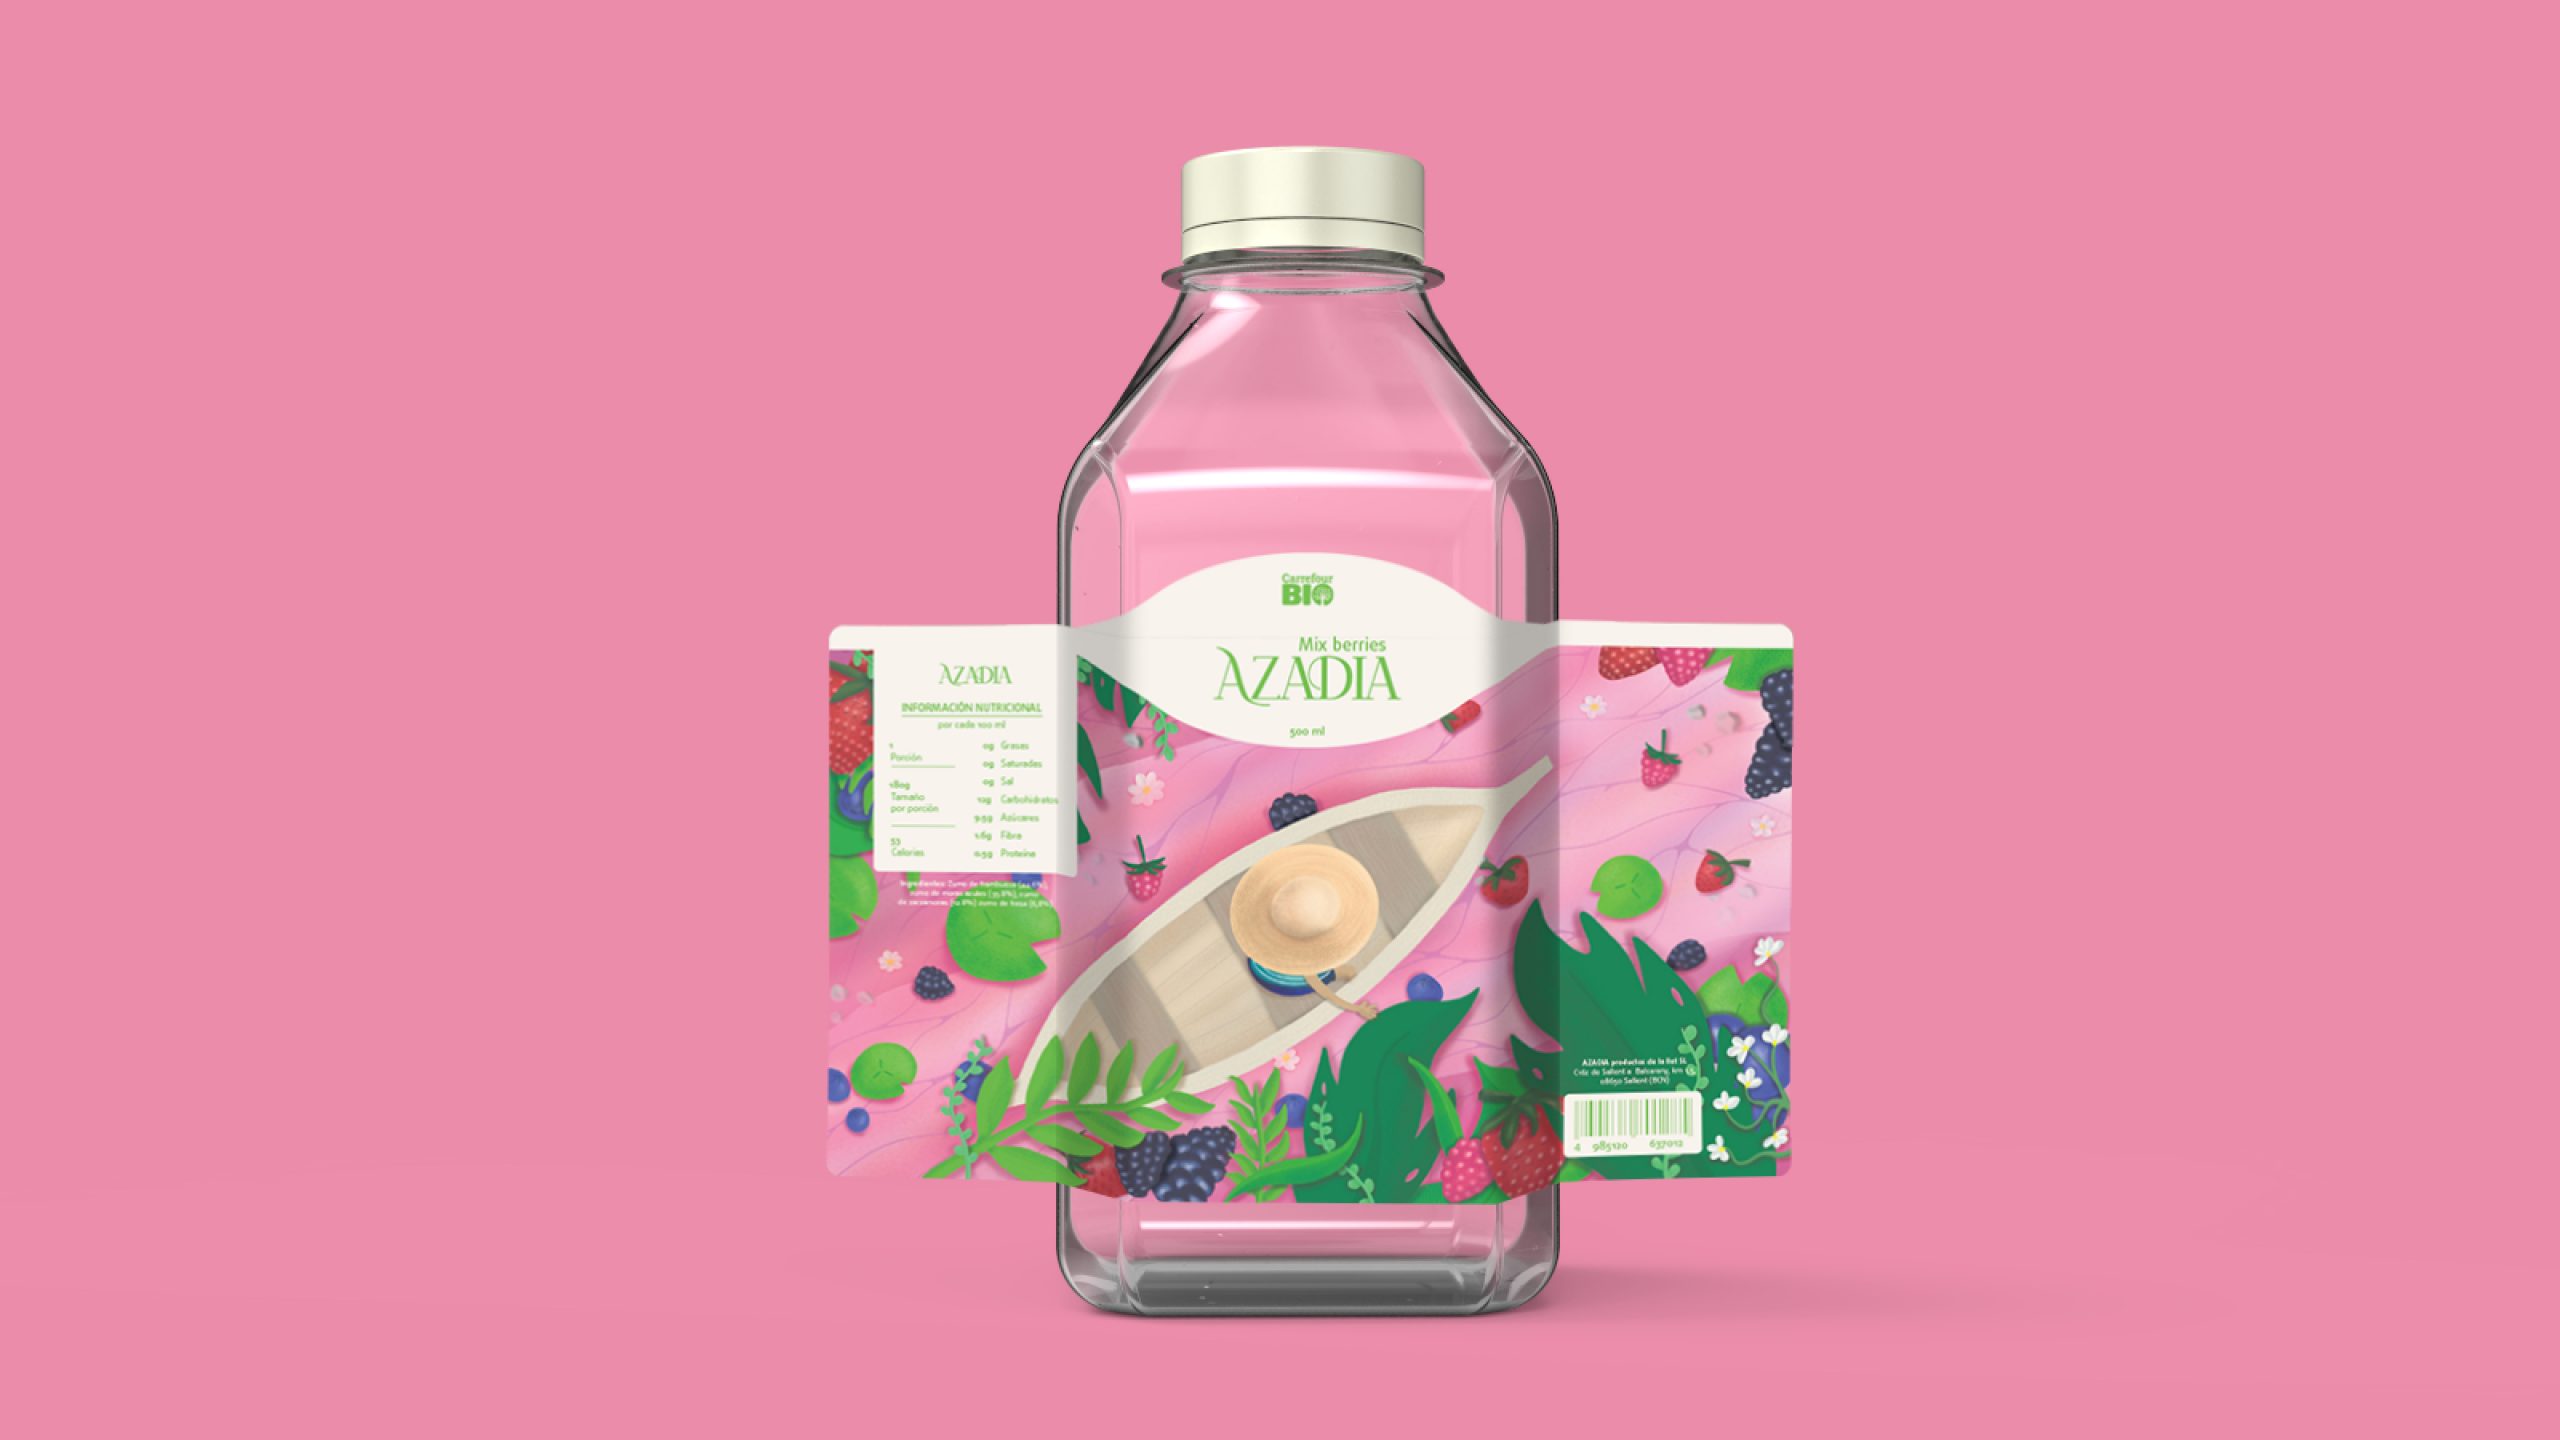 packaging design label of AZADIA's green juice range, in the mix berries flavor, label extended